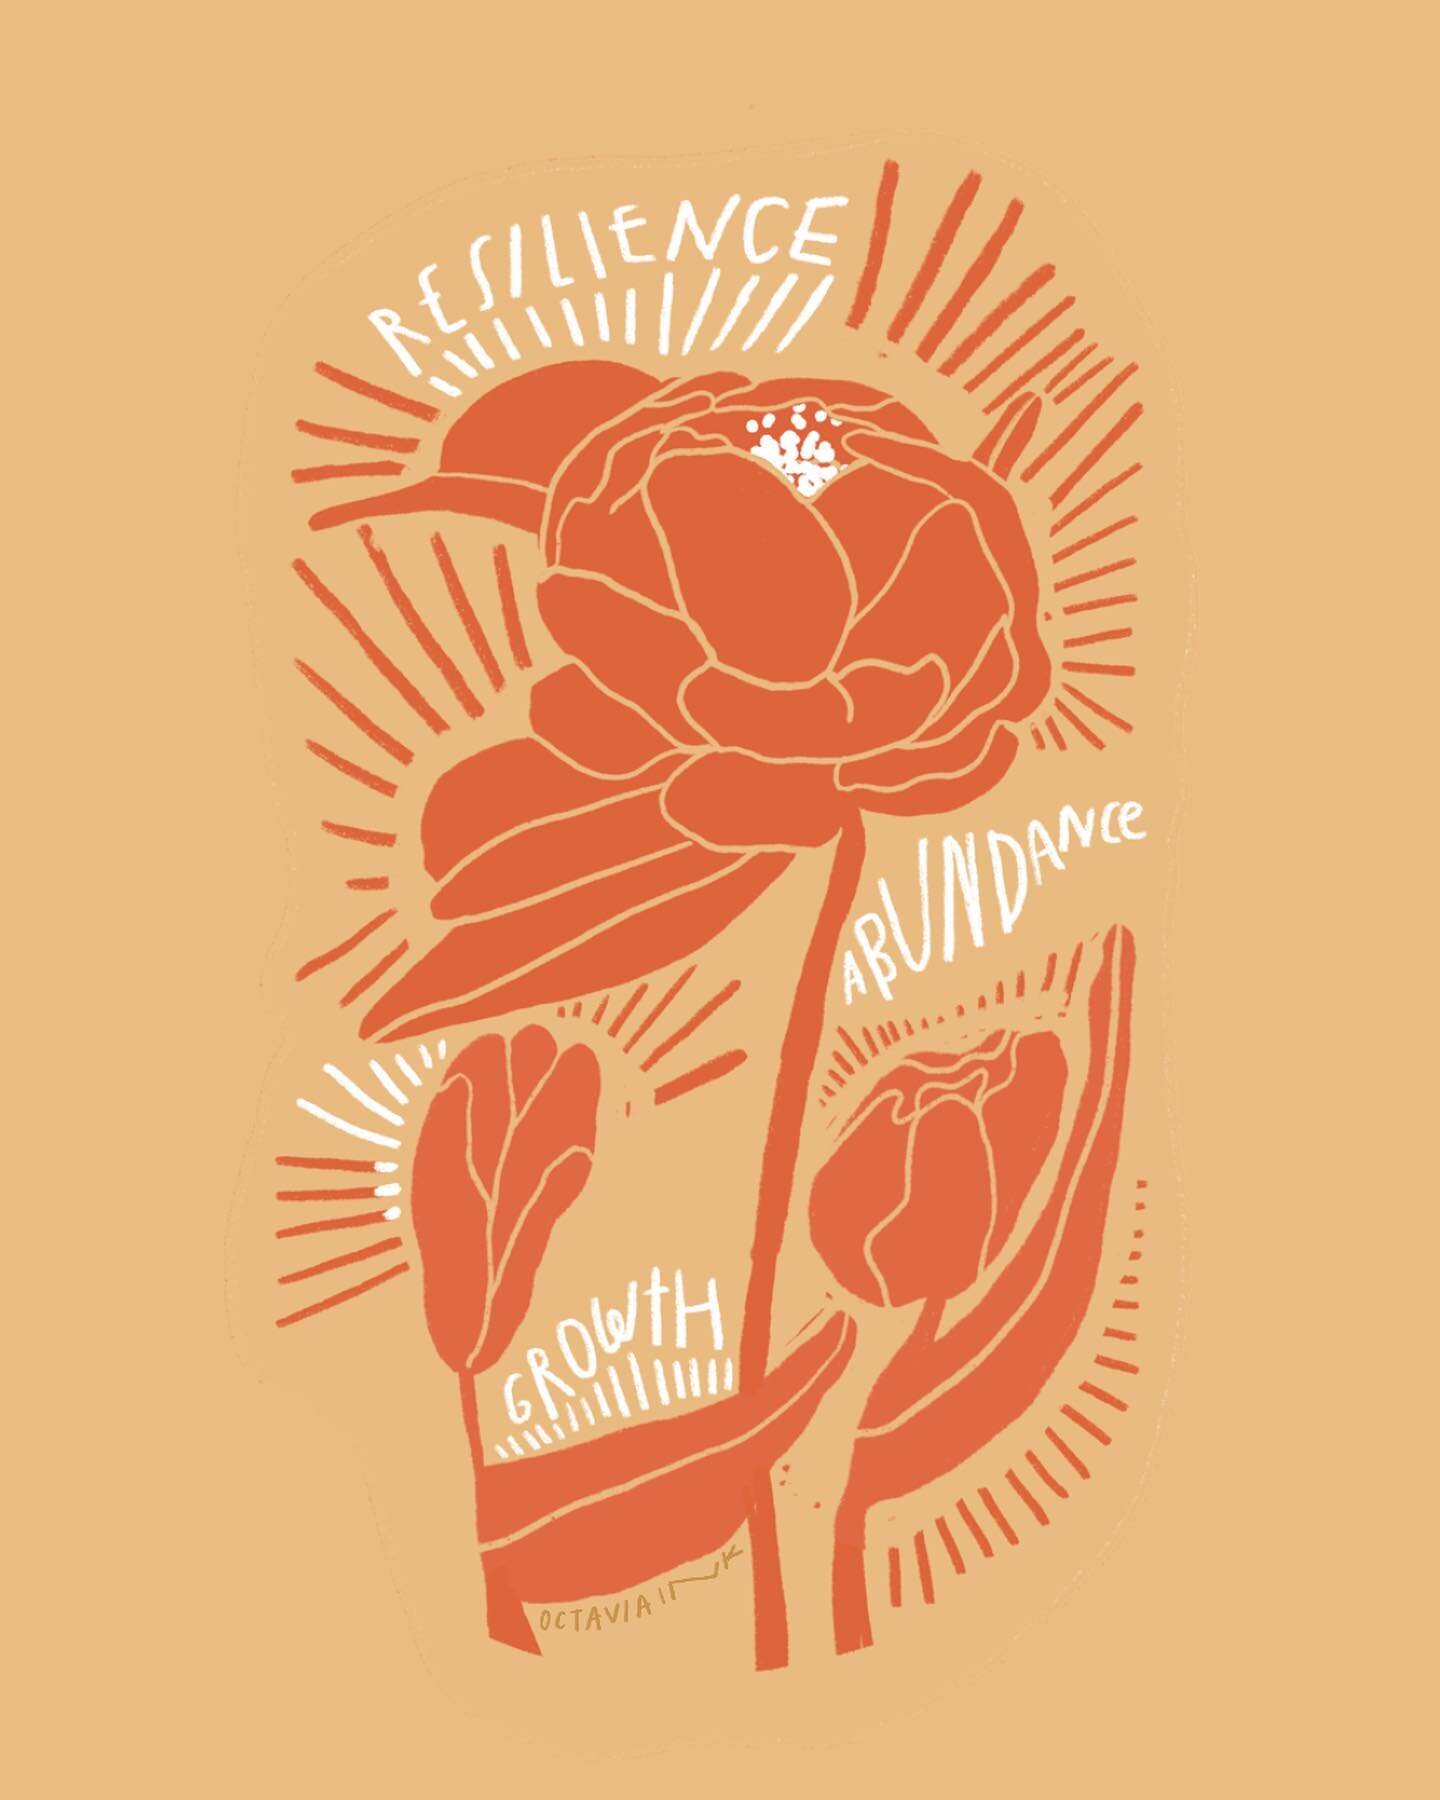 resilience &bull; abundance &bull; growth

.
.
.
get this sticker via patre0n! 
link in bio 💛

.
.

#procreate #procreateart #artistsoninstagram #illustration #illus #blackillustrators #blackart #womenwhodraw #blackgirlsillustrate